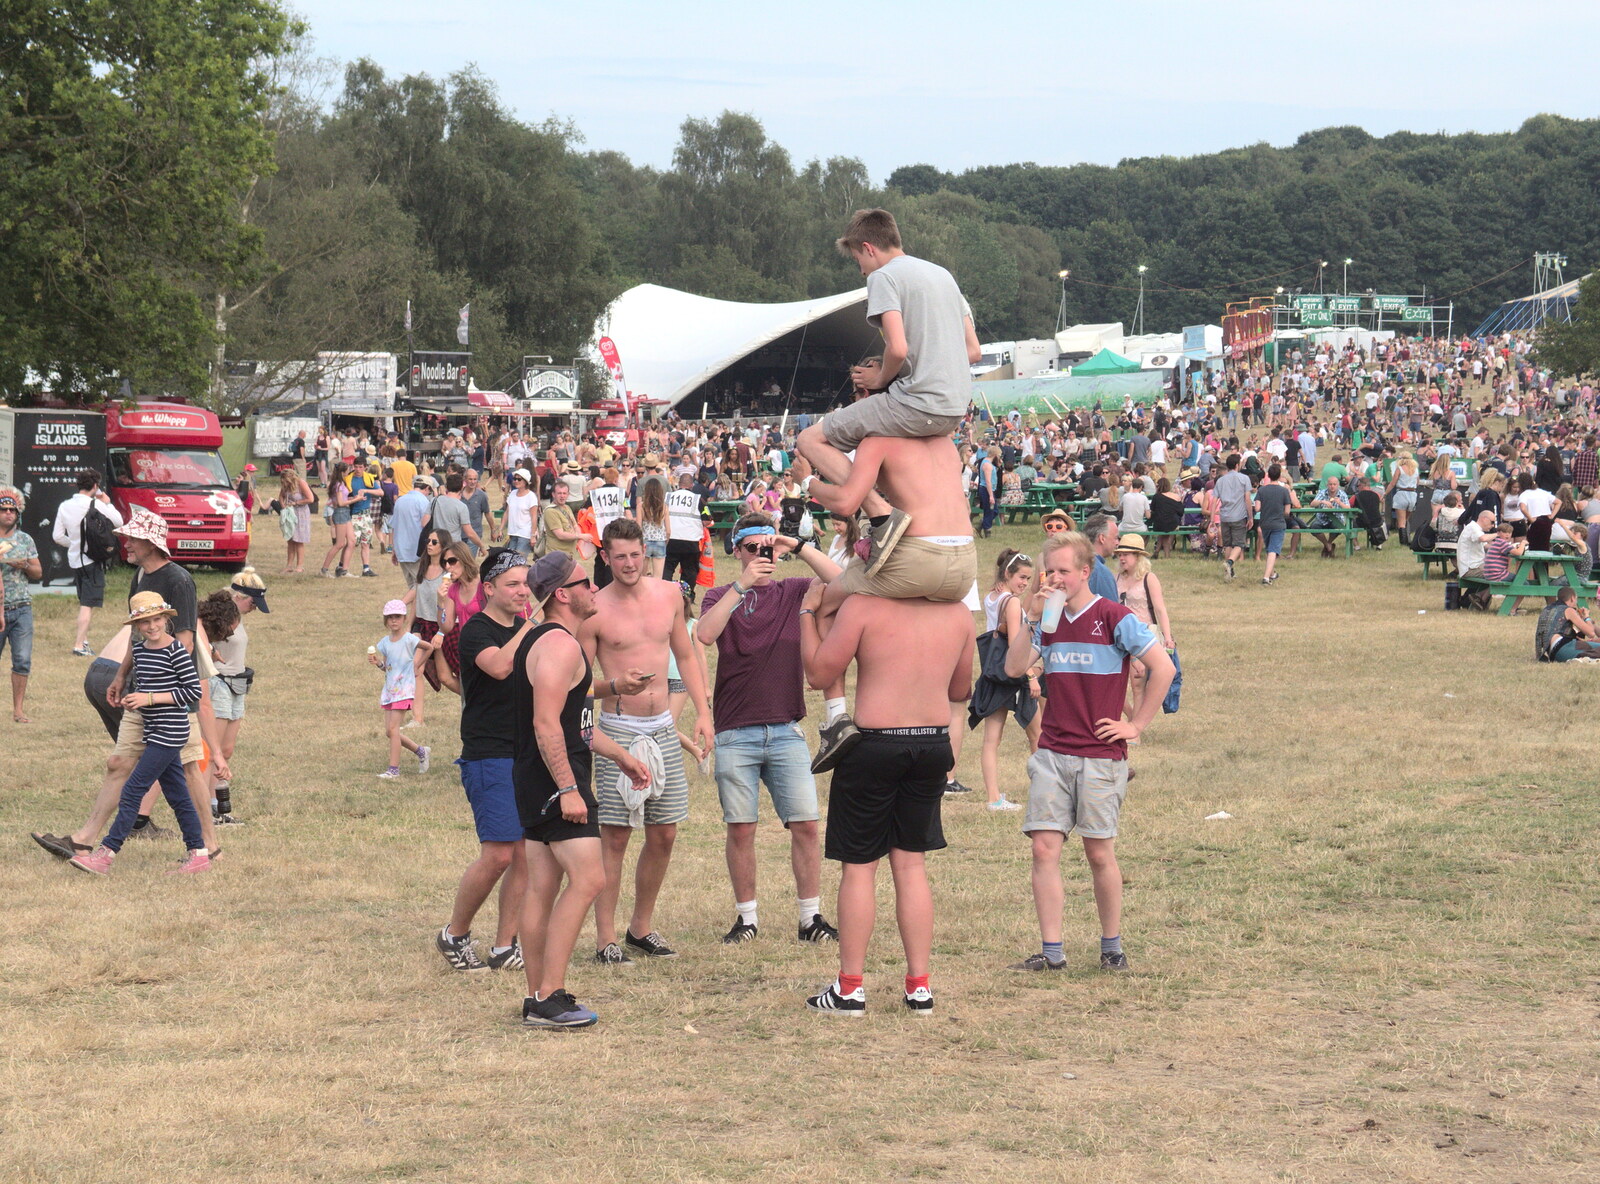 A bit of impromptu crowd acrobatics goes on from Latitude Festival, Henham Park, Southwold, Suffolk - 17th July 2014